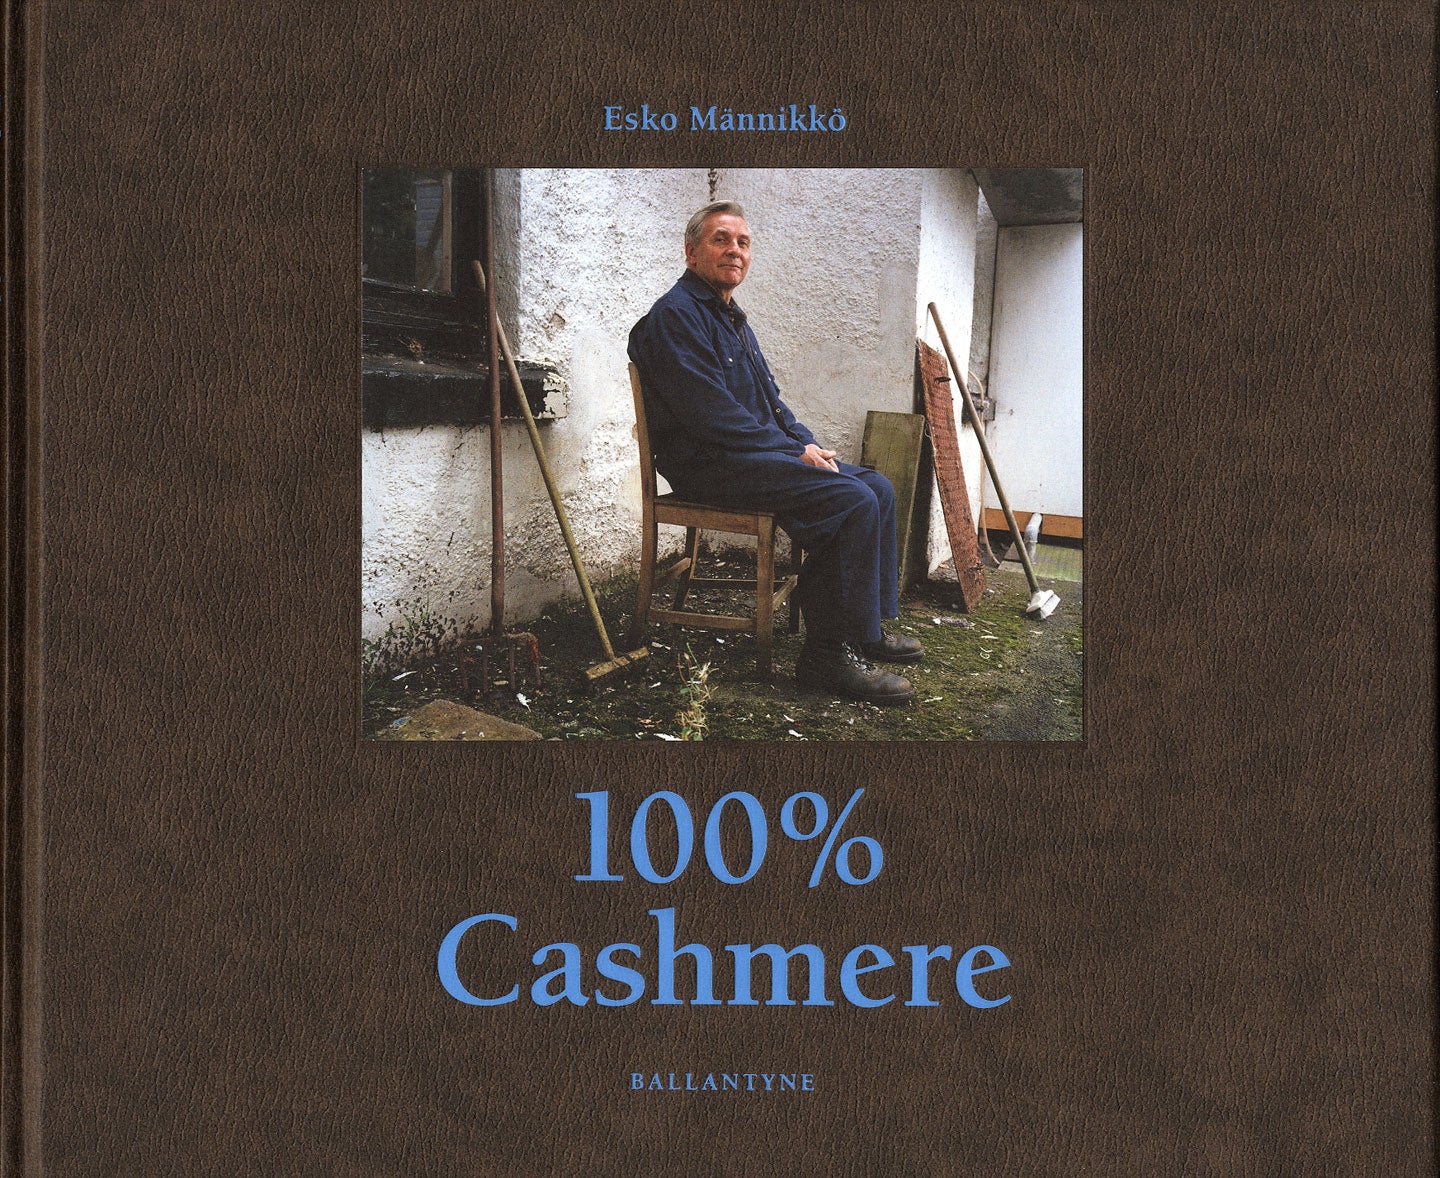 Esko Männikkö: Mexas, Naarashauki: The Female Pike & 100% Cashmere (All First Editions) [Each SIGNED]